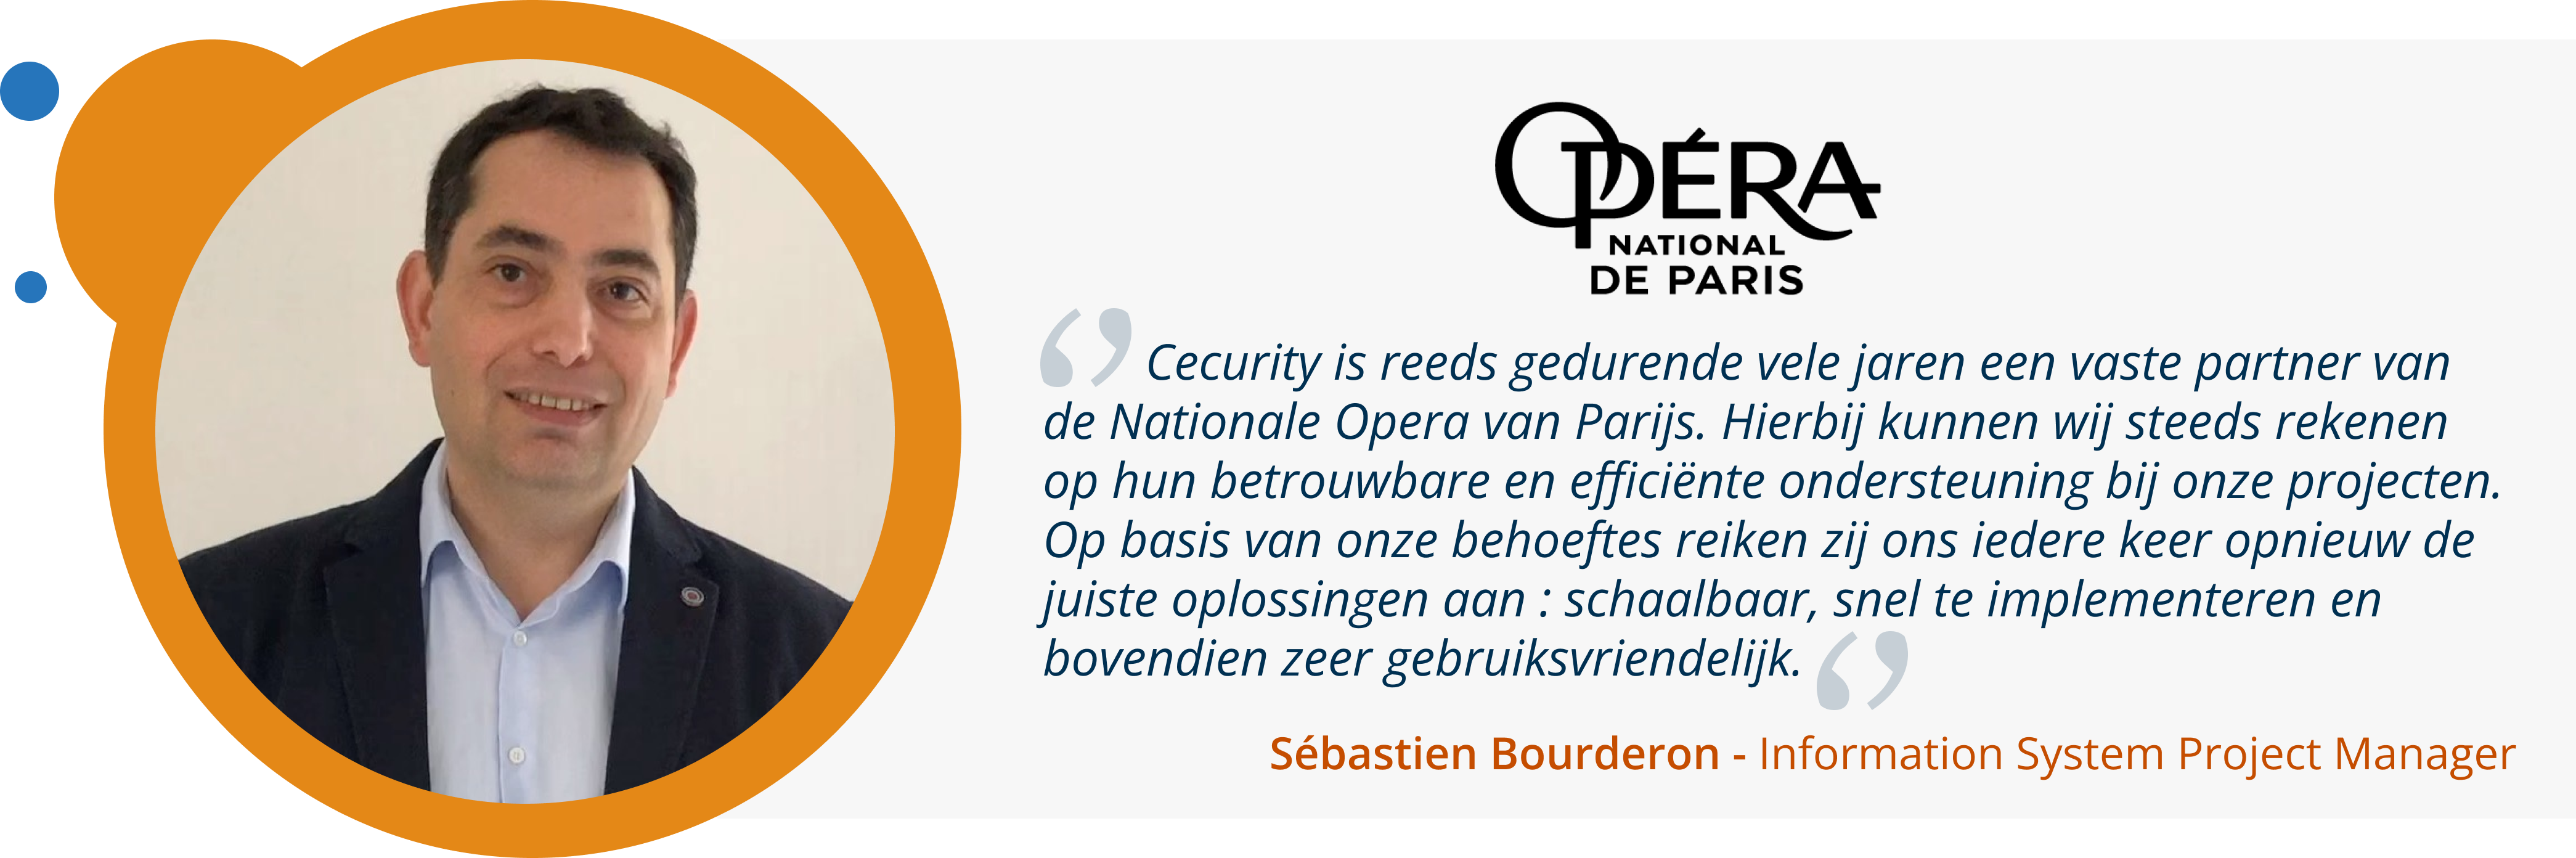 Paris Opera's mening op Cecurity.com